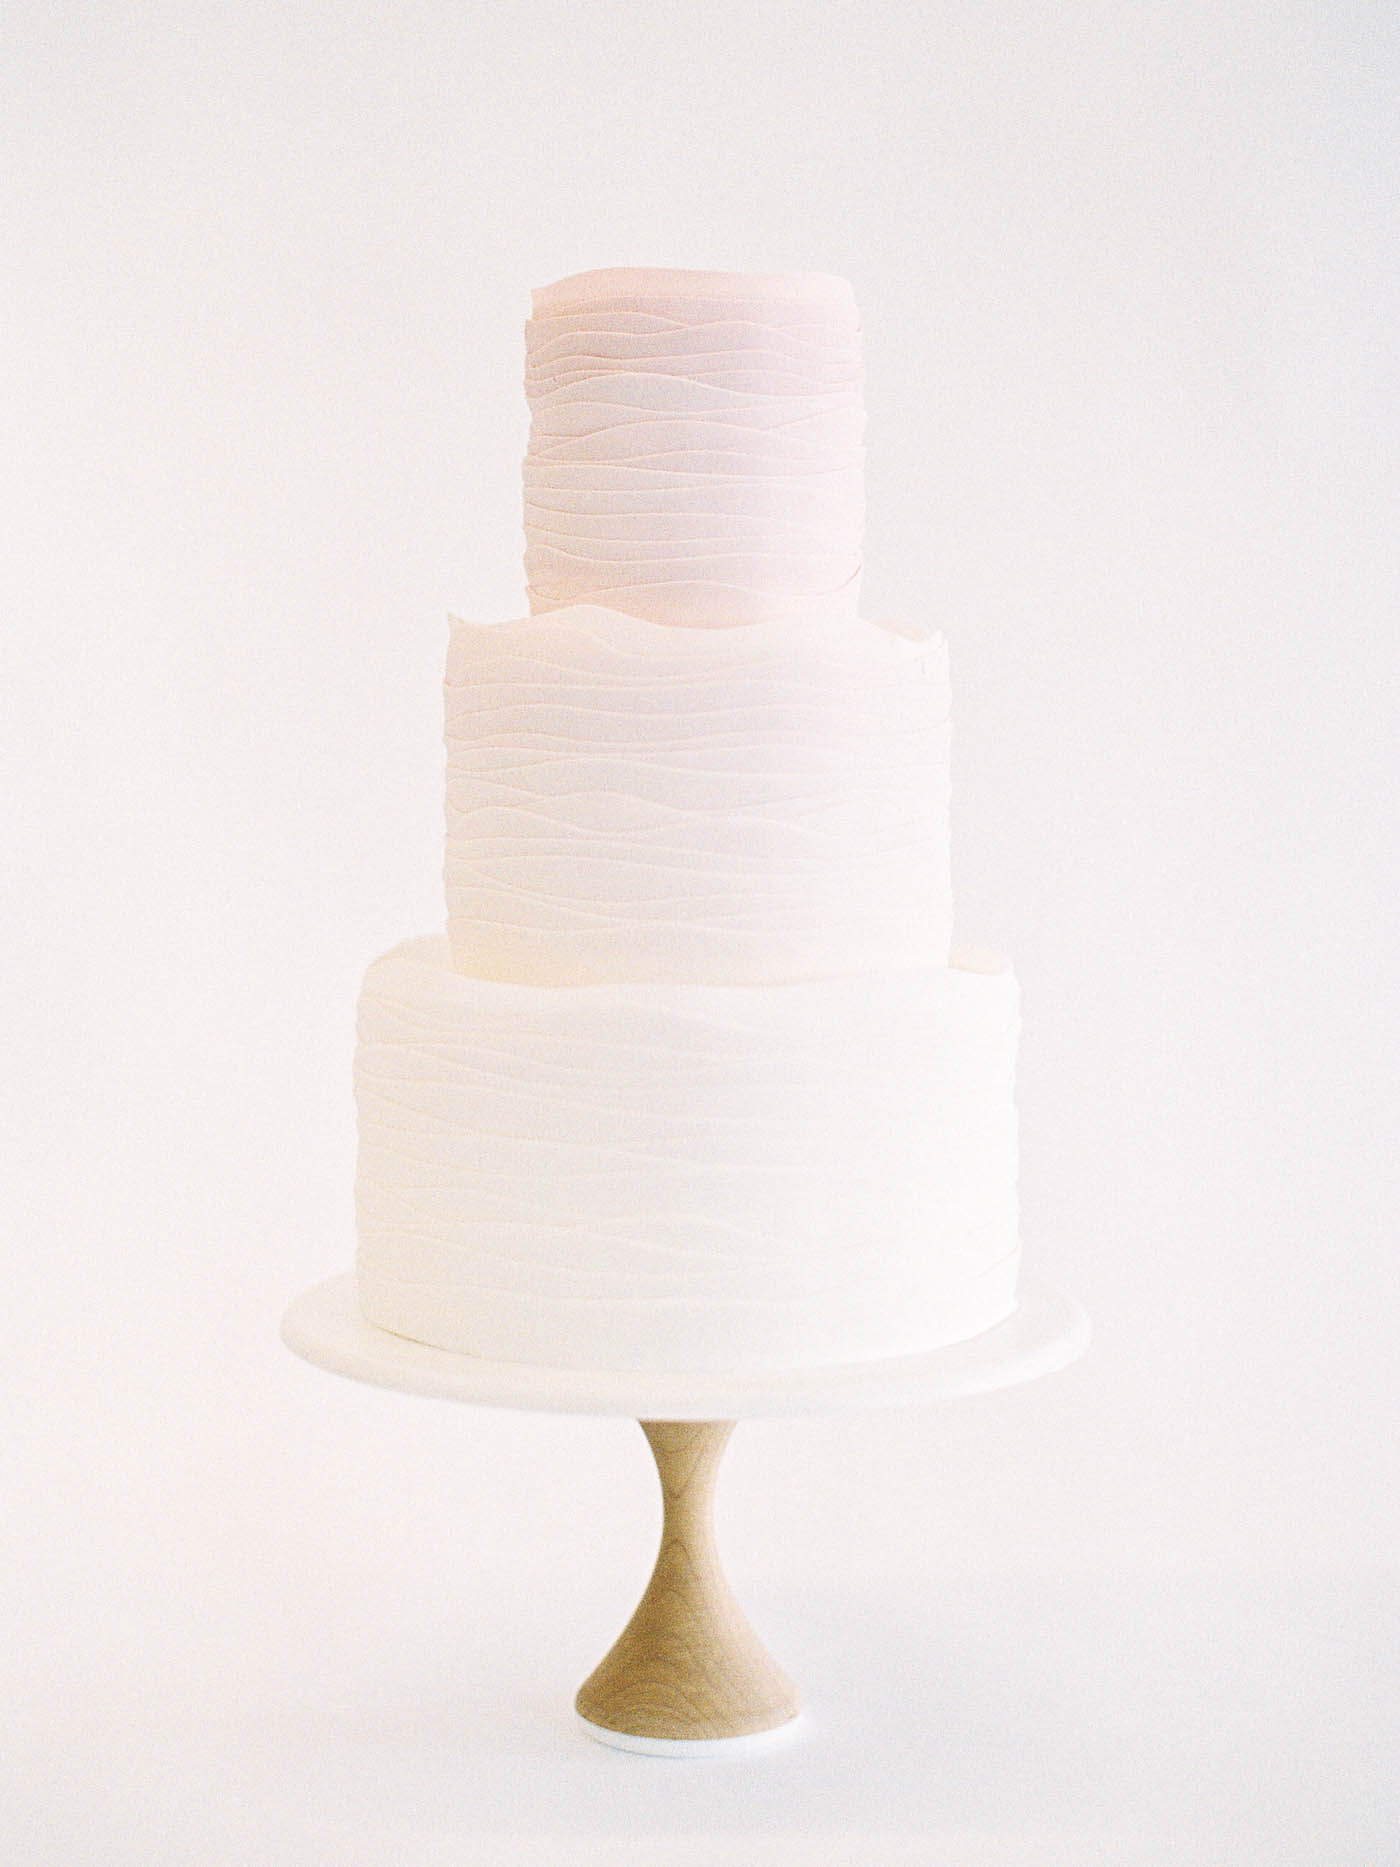 Delicate-Wedding-Cakes-3-Jen_Huang-002344-R1-003.jpg